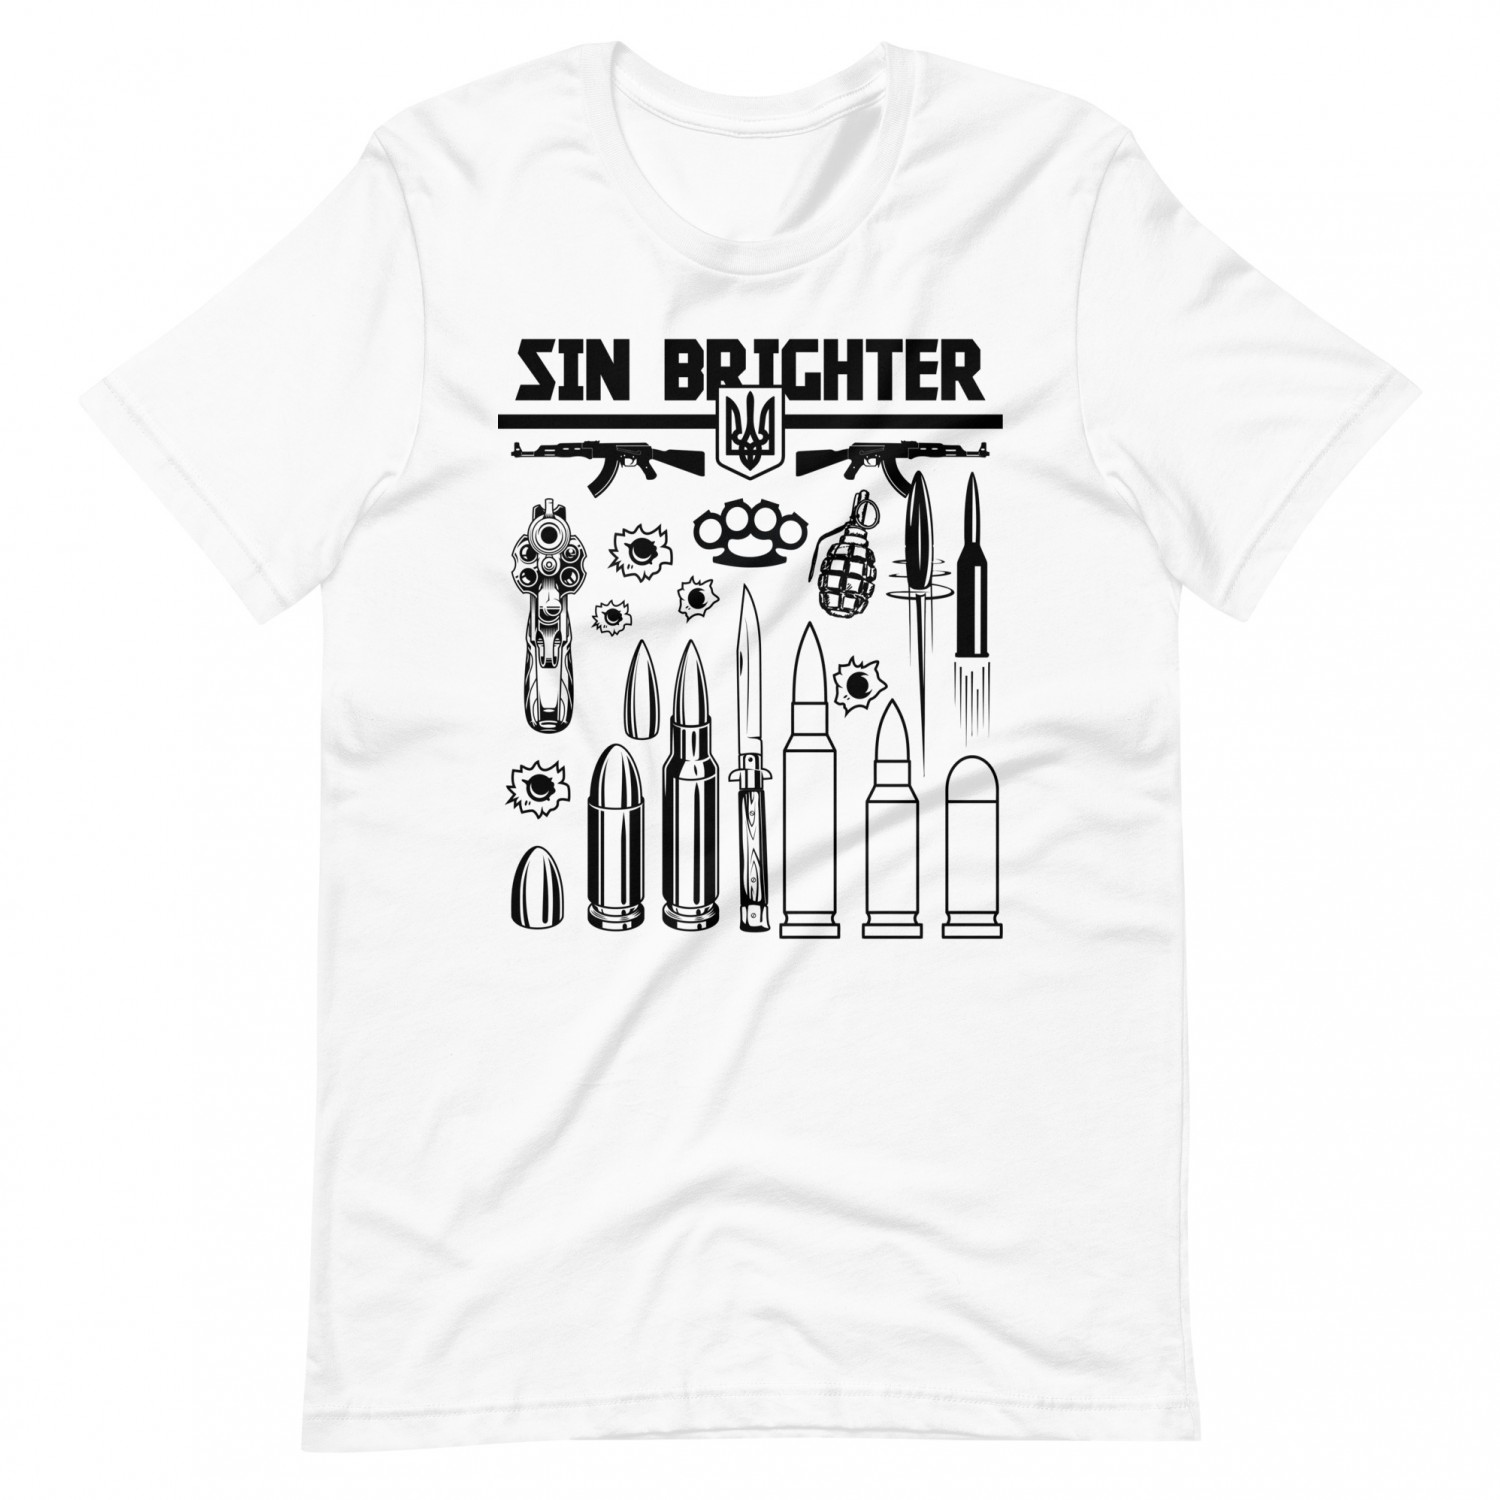 Buy Grisha's t-shirt brighter